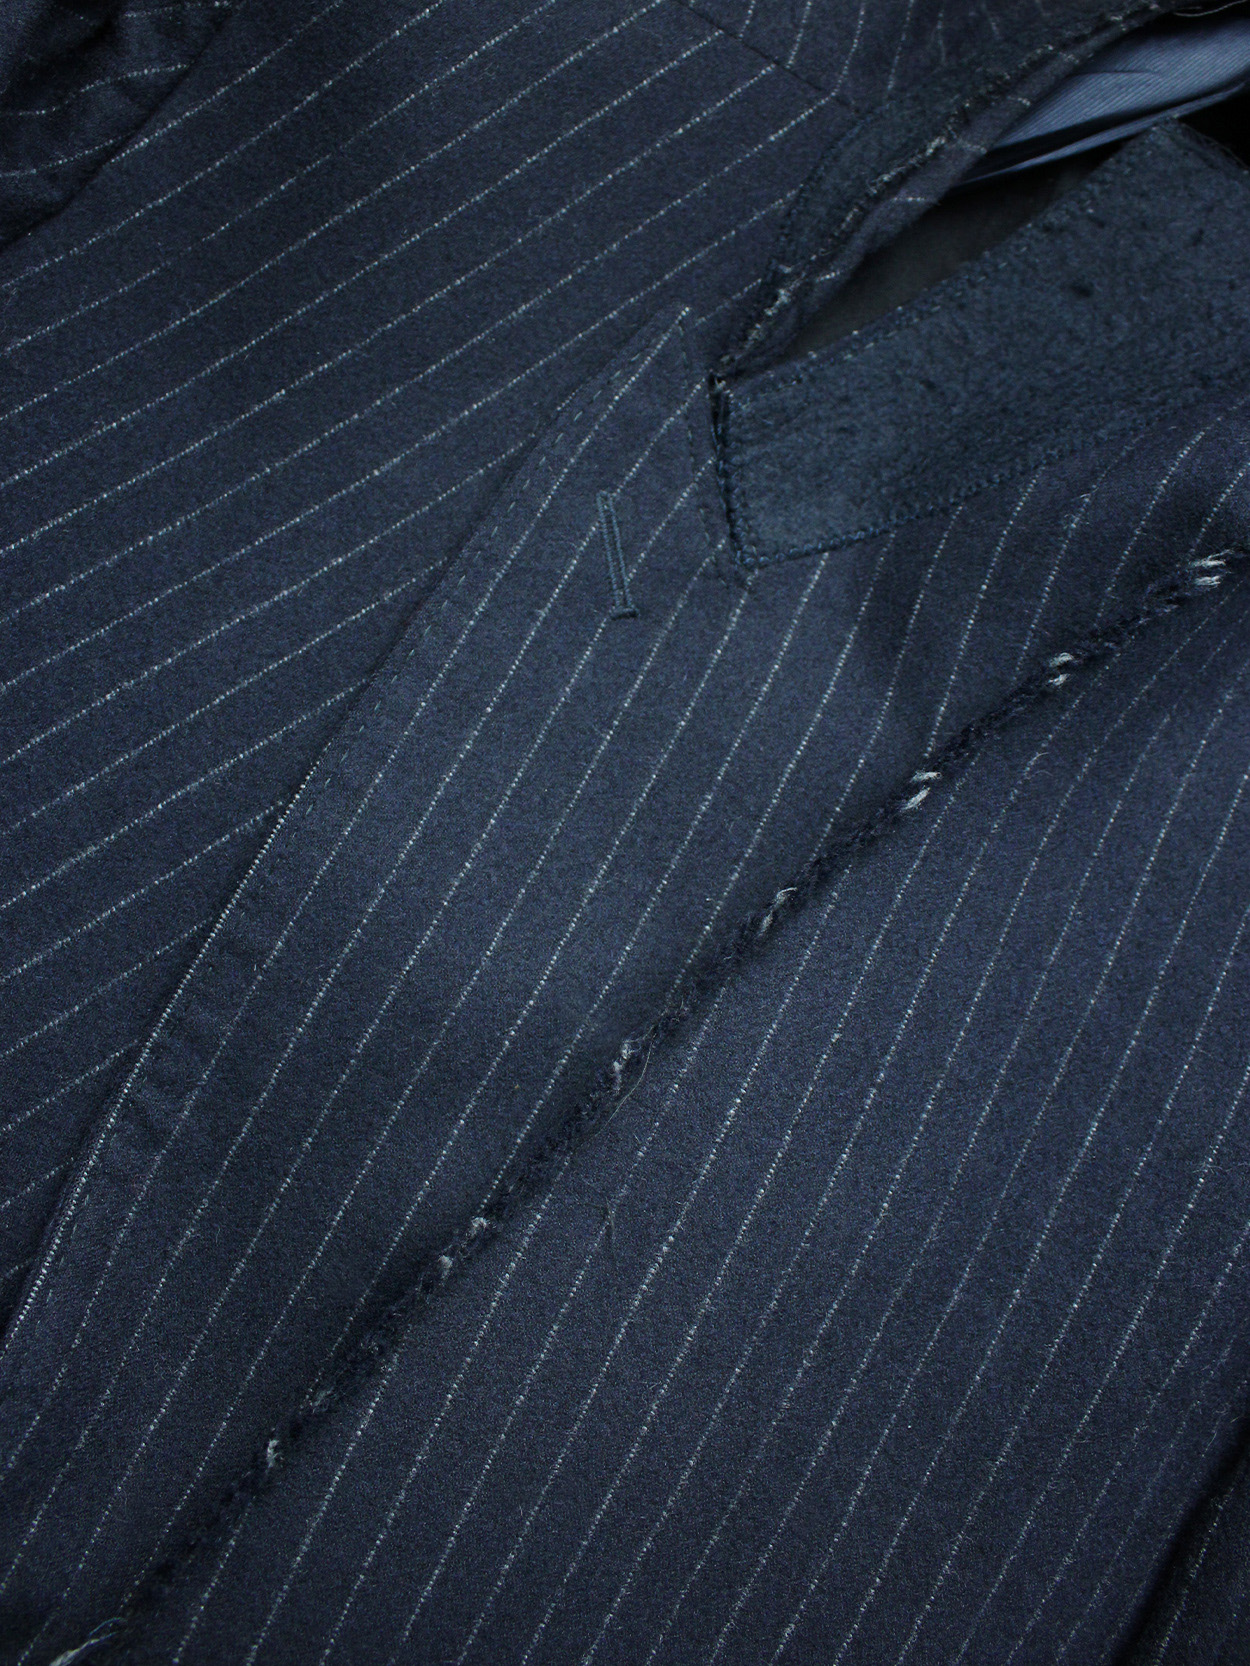 vaniitas Maison Martin Margiela pinstripe blazer with detached lapel and exclusive fabric tags fall 2004 (16)